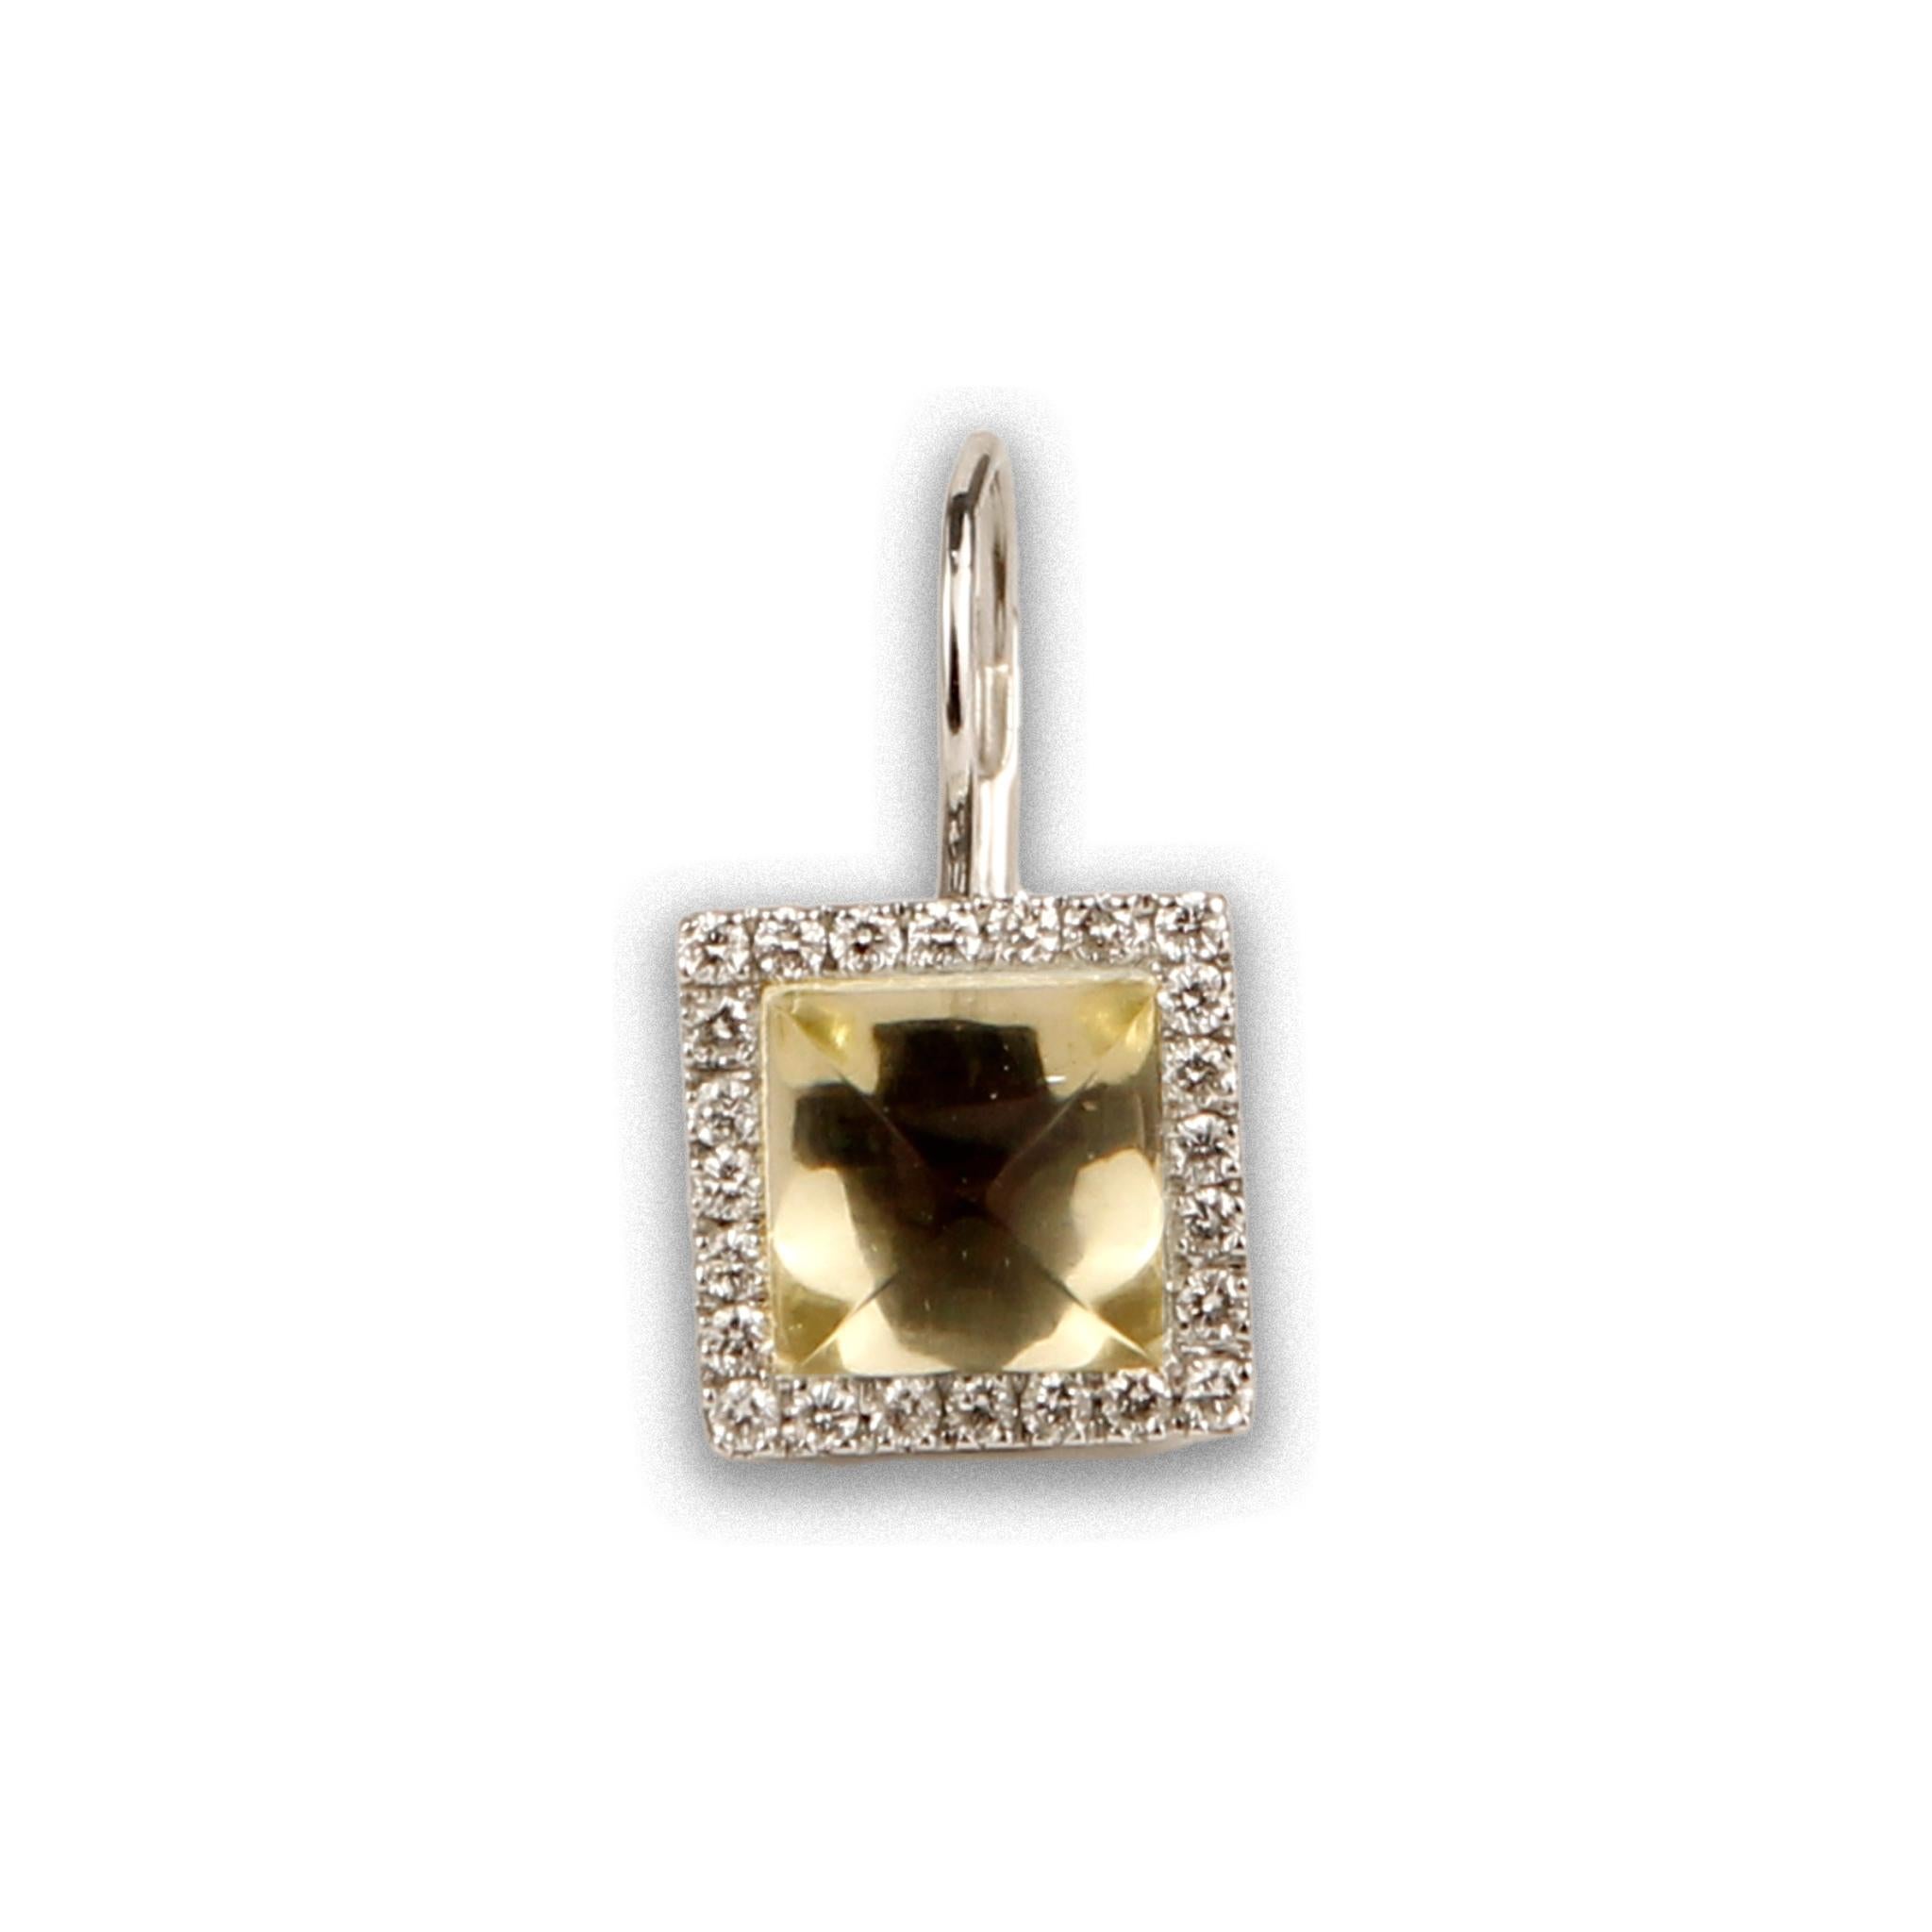 Porrati
18K White Gold
Diamond: 0.77ctw
SKU: BLU01697
Retail price: $7,160.00